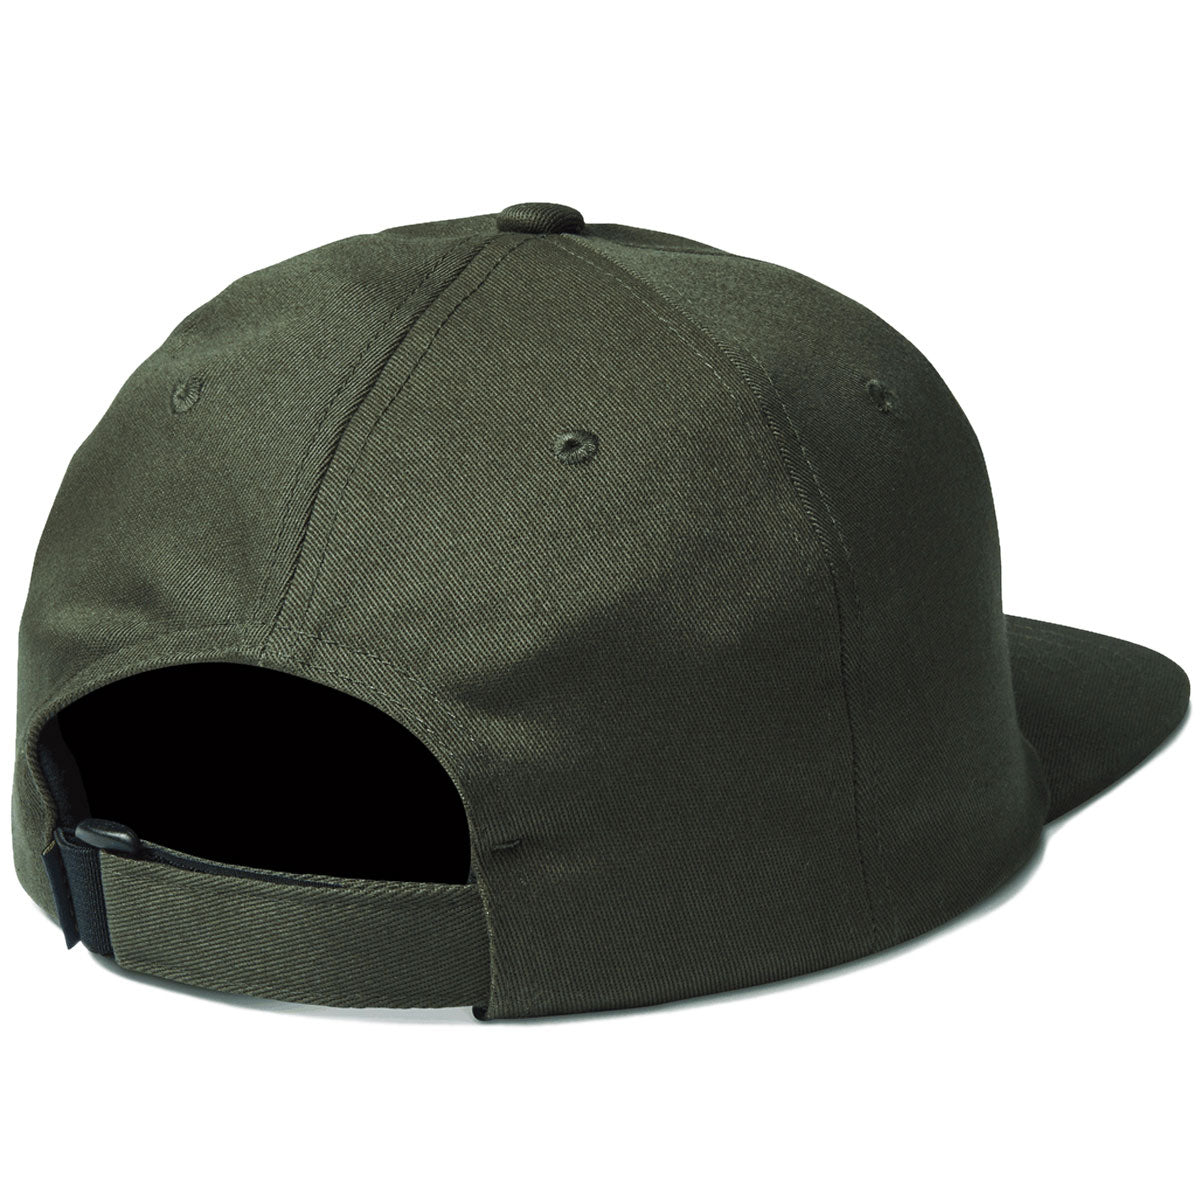 Roark Layover Hat - Military image 2